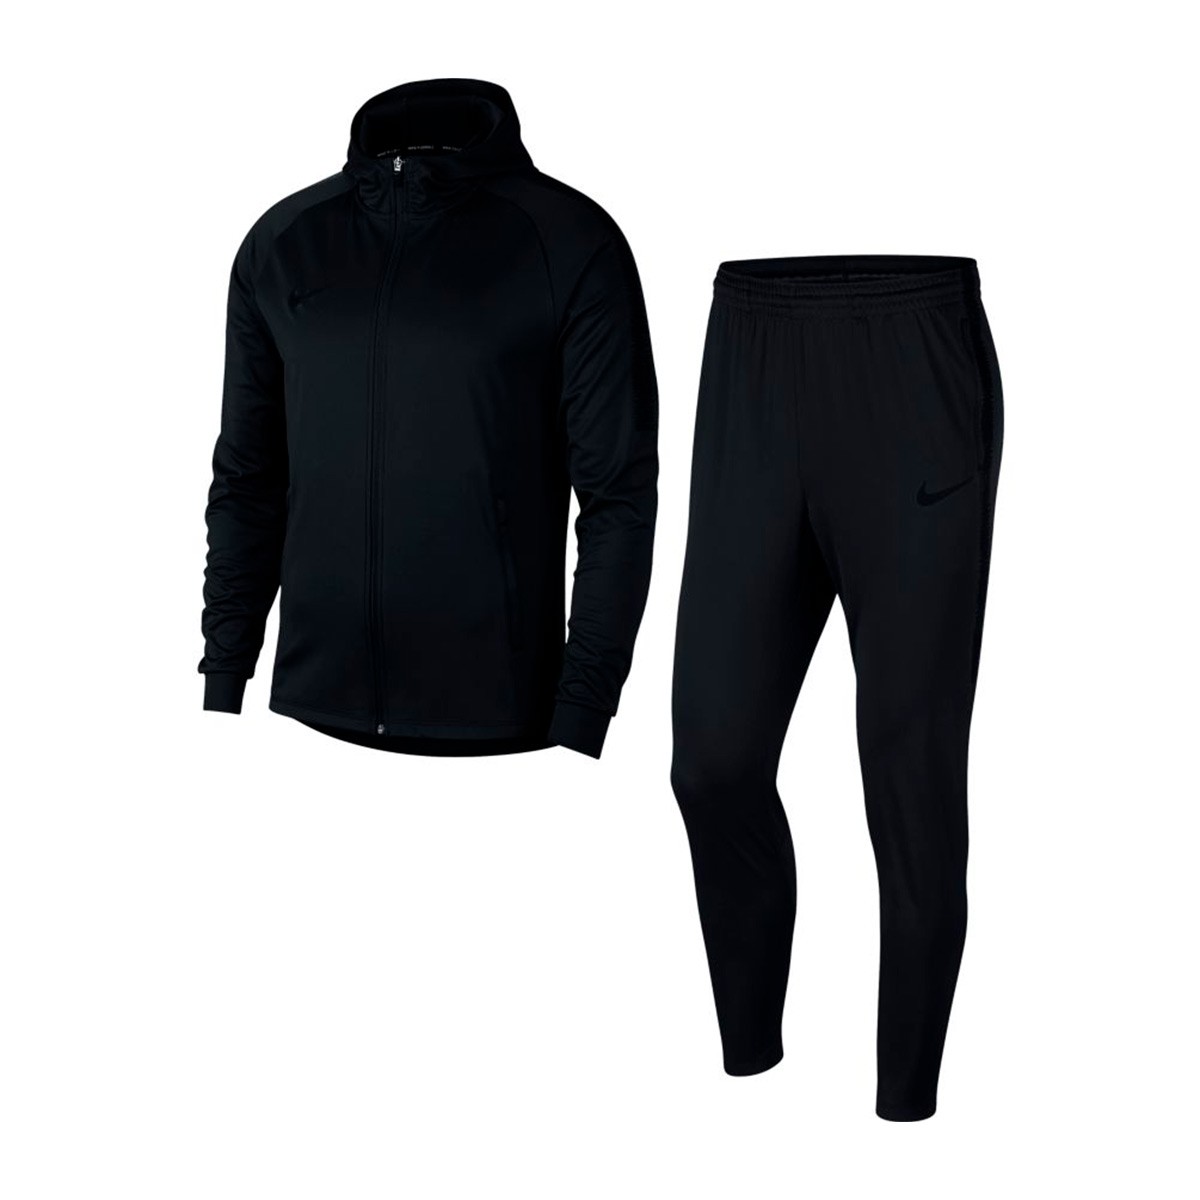 Conjunto pants Nike Dry Squad Black - Tienda de fútbol Fútbol Emotion